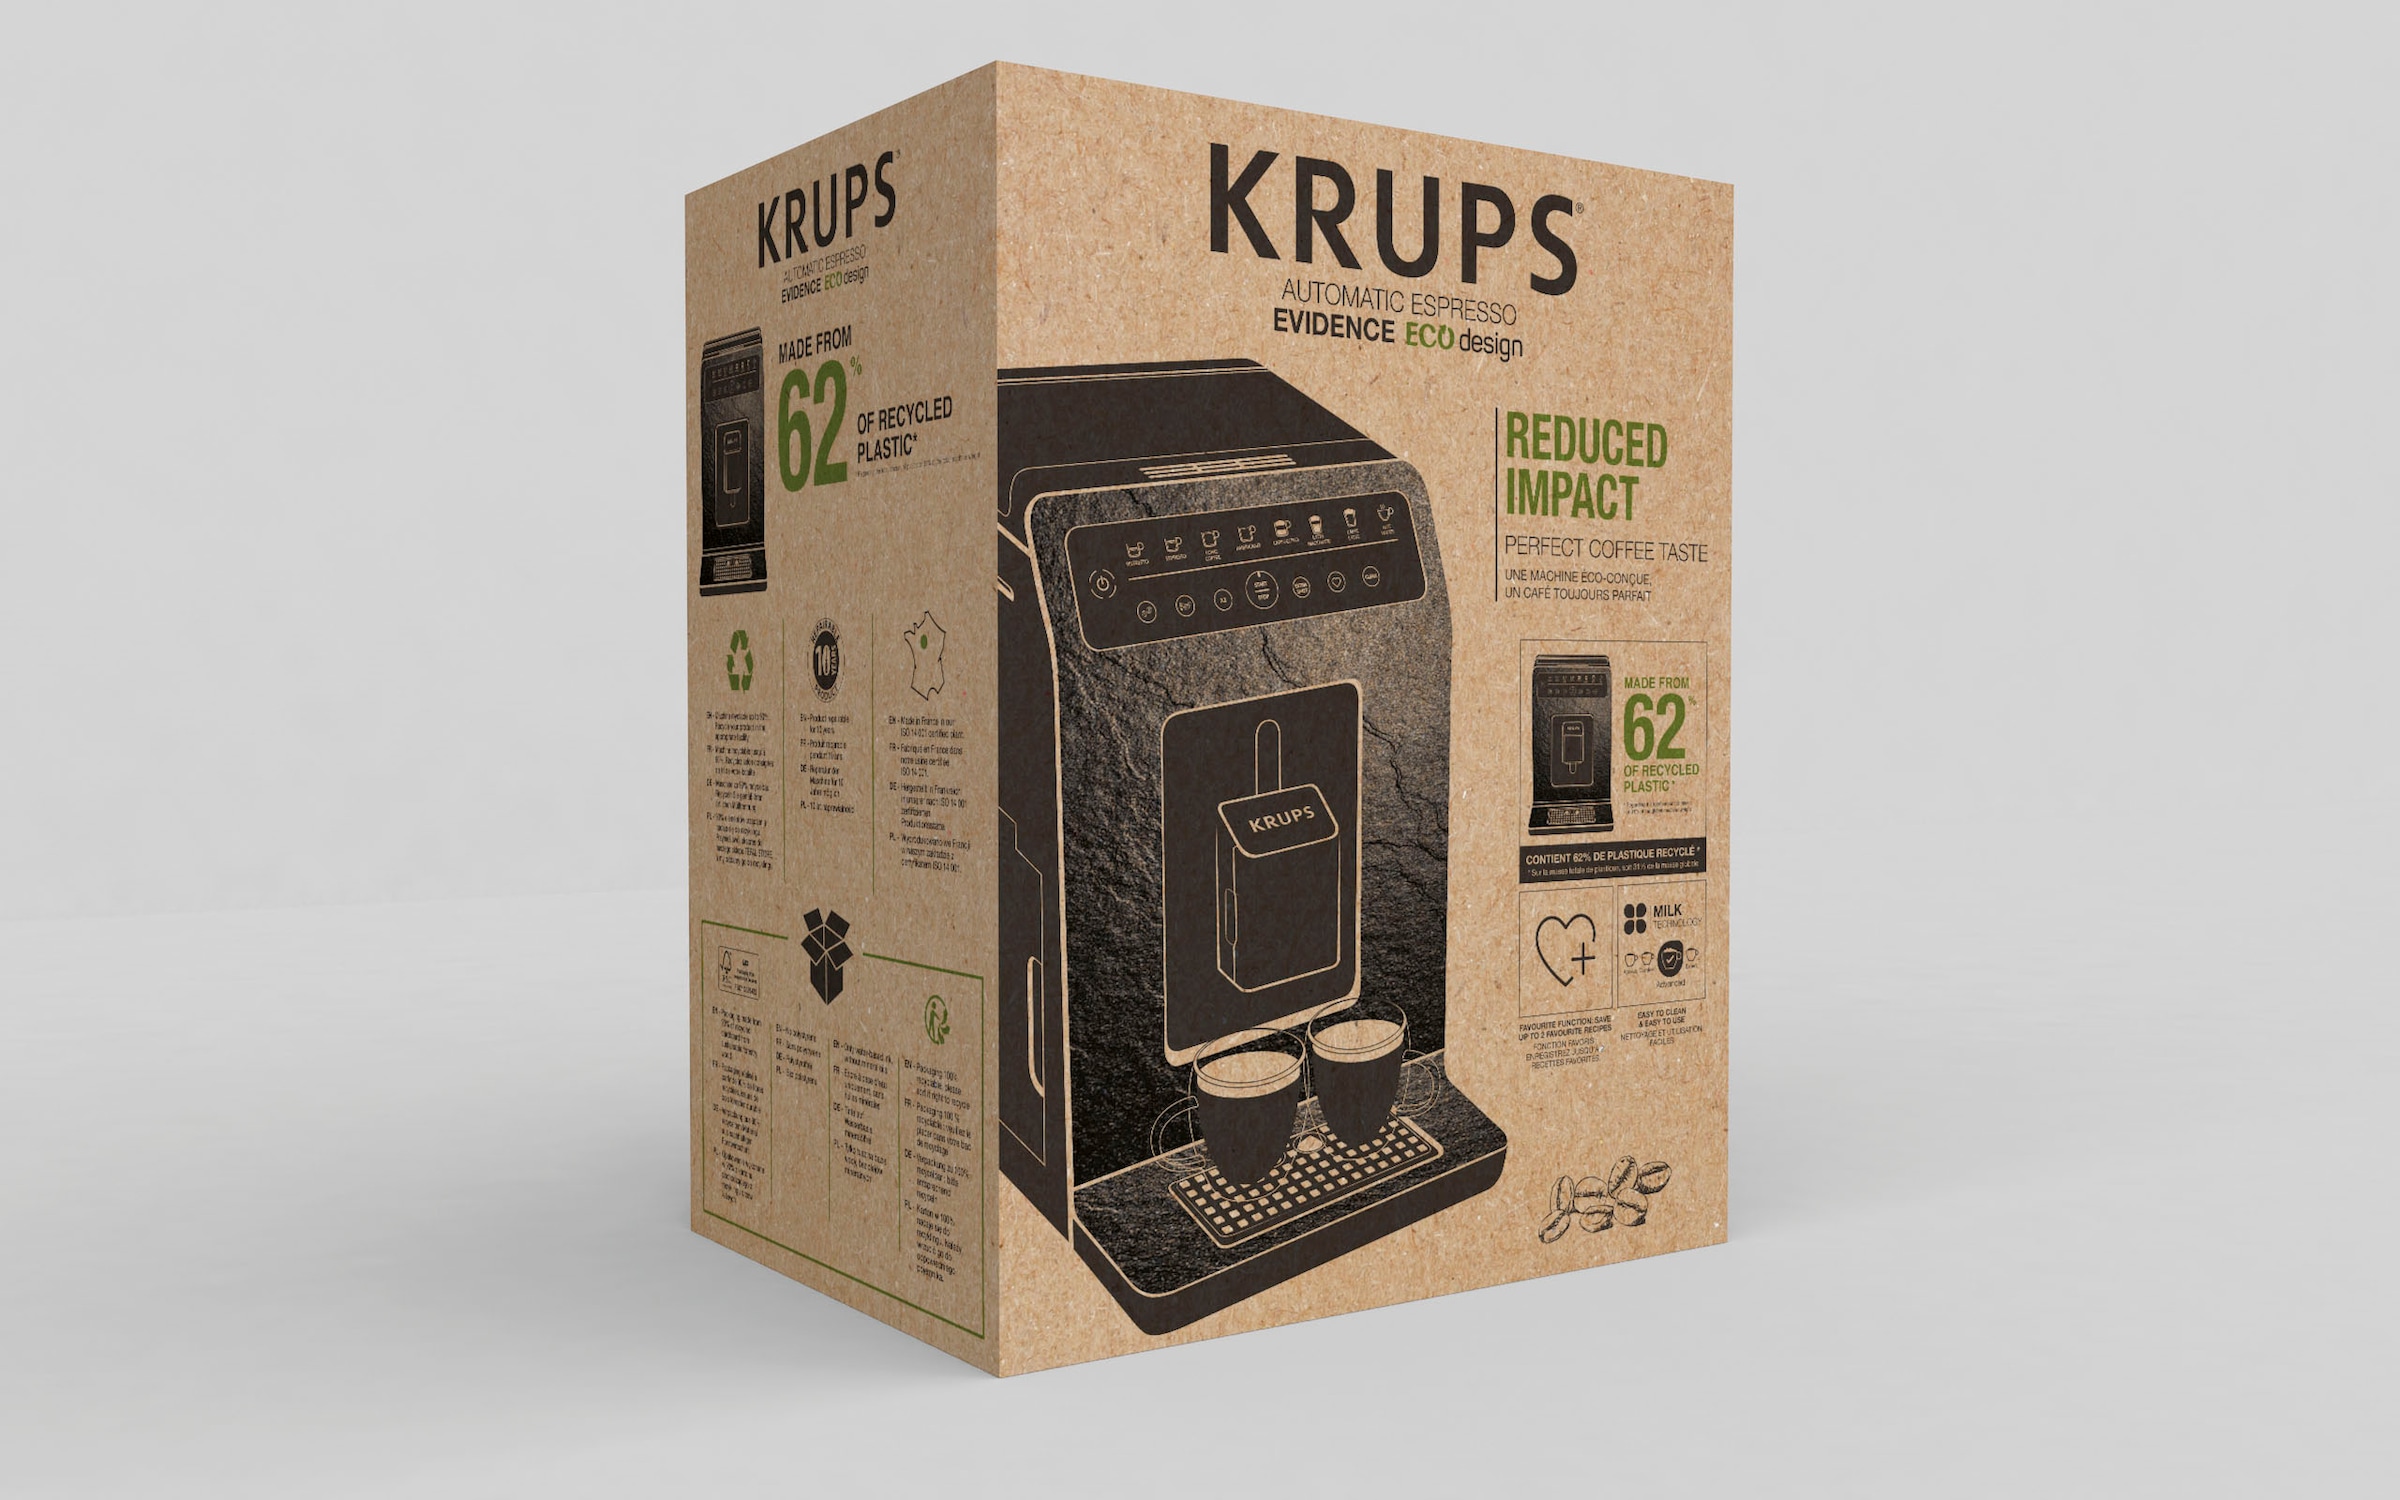 Krups Kaffeevollautomat online bei »EA897B ECOdesign« Evidence